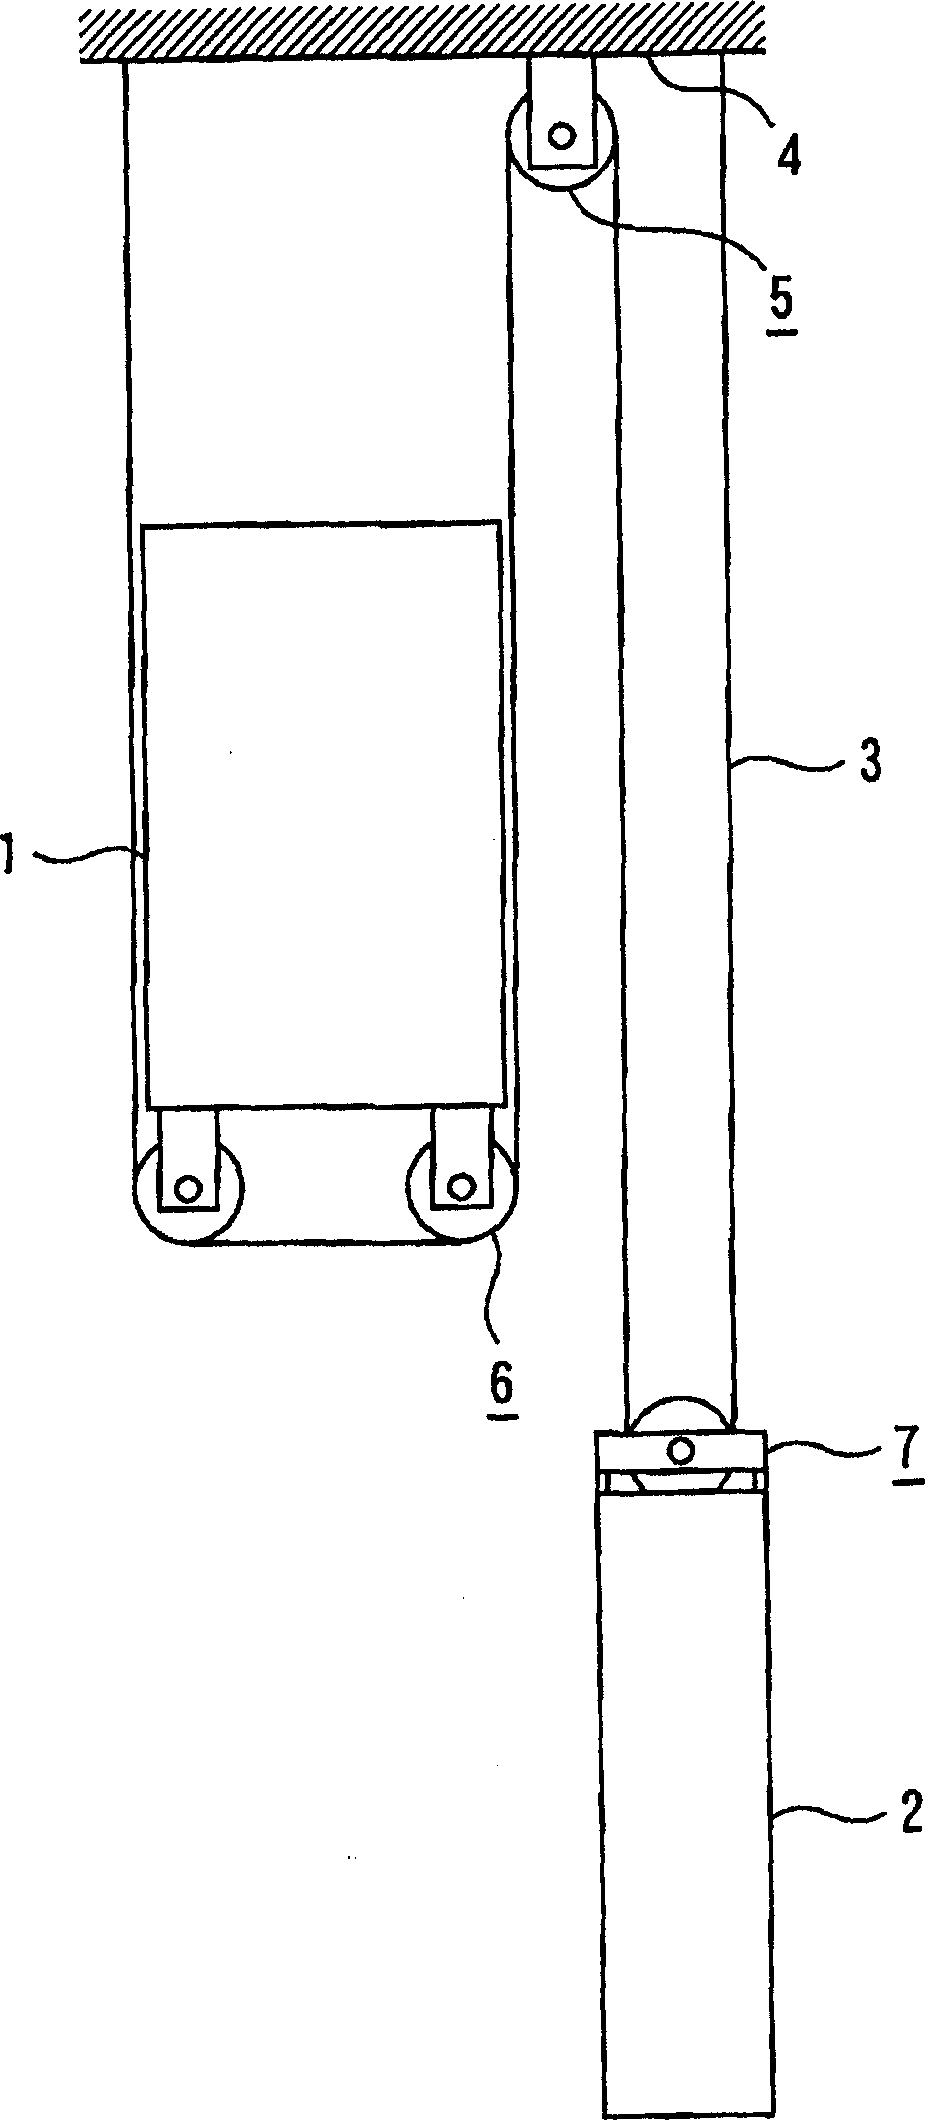 Elevator apparatus